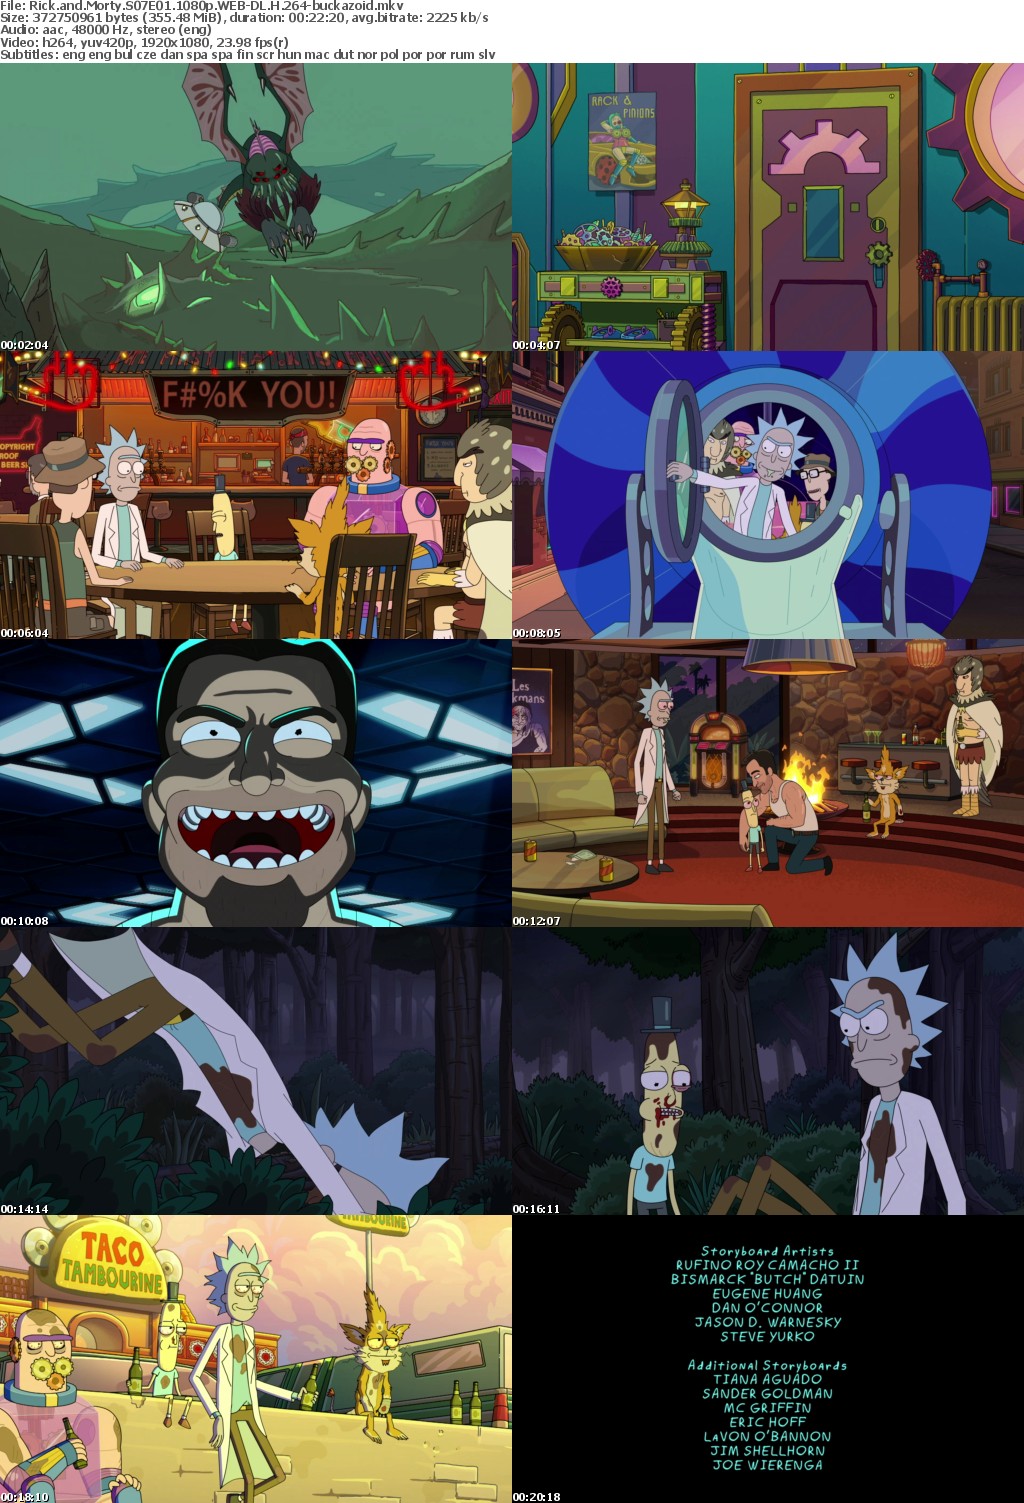 Rick and Morty S07E01 1080p WEB-DL H 264-buckazoid